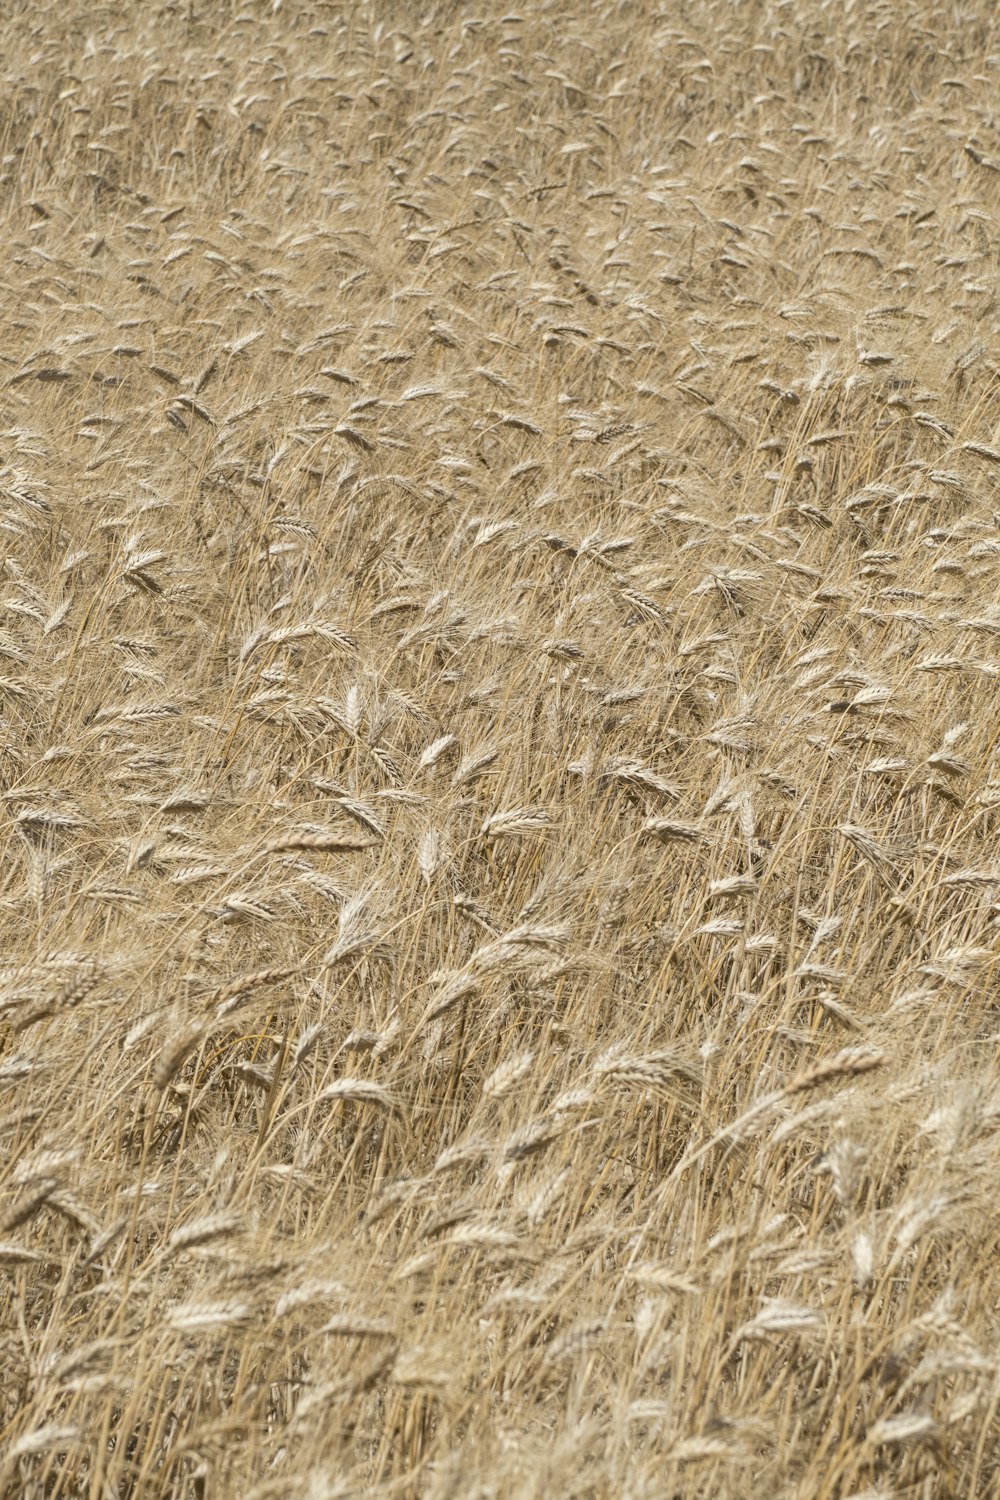 campos de trigo integral